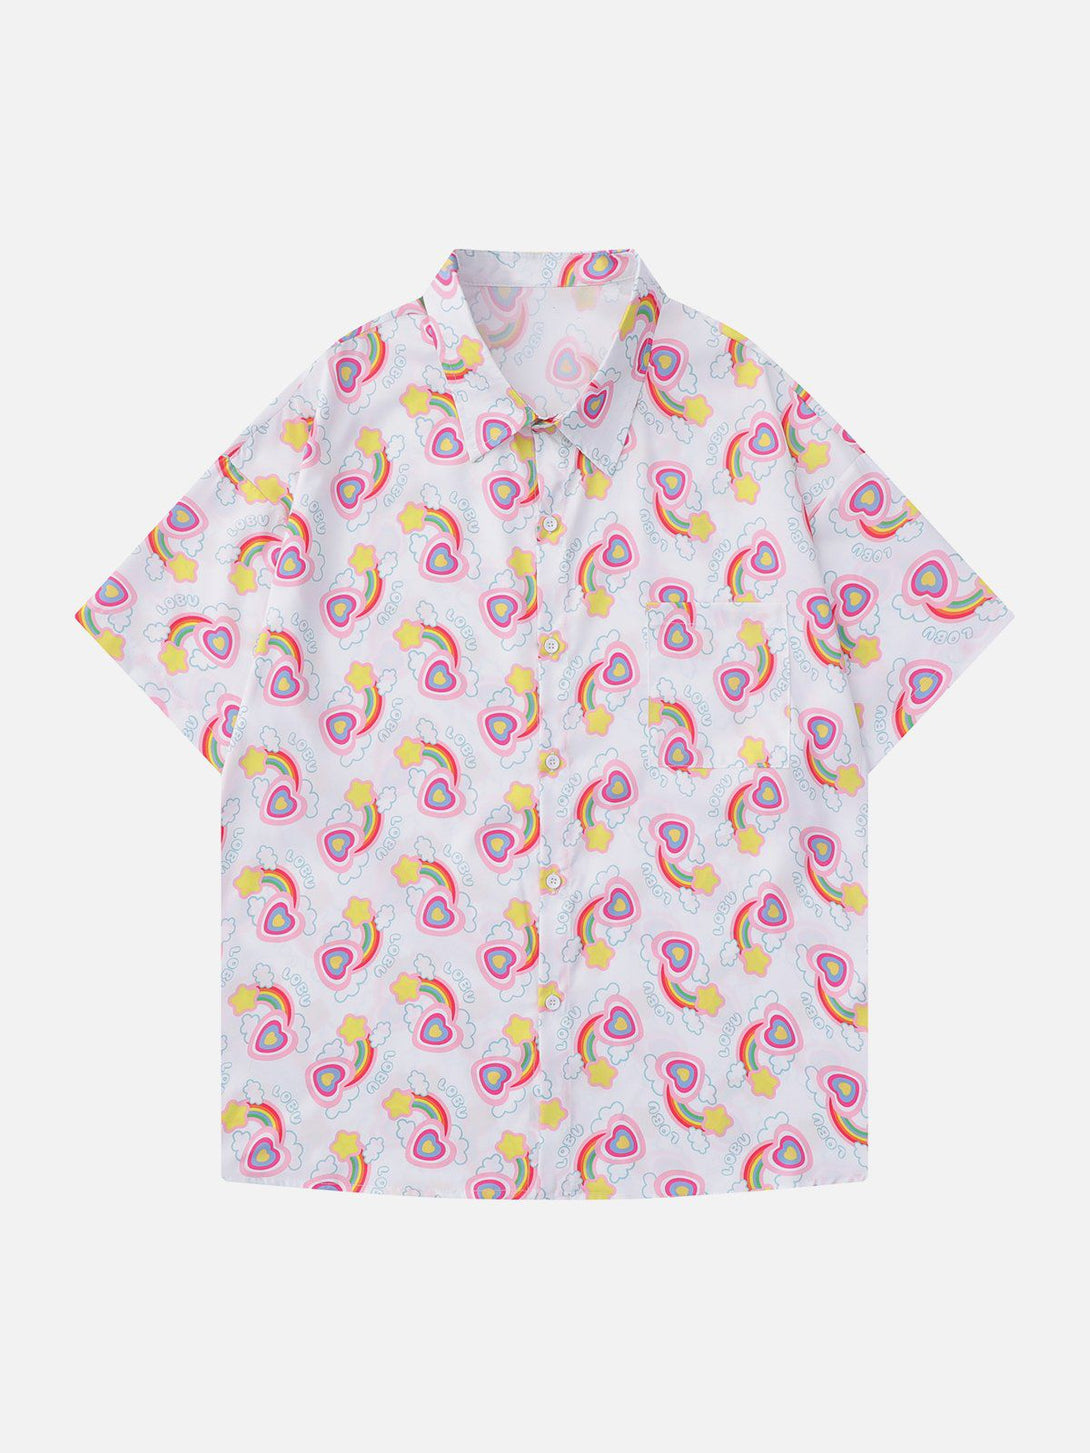 Majesda® - Rainbow Love Print Short Sleeve Shirts outfit ideas streetwear fashion